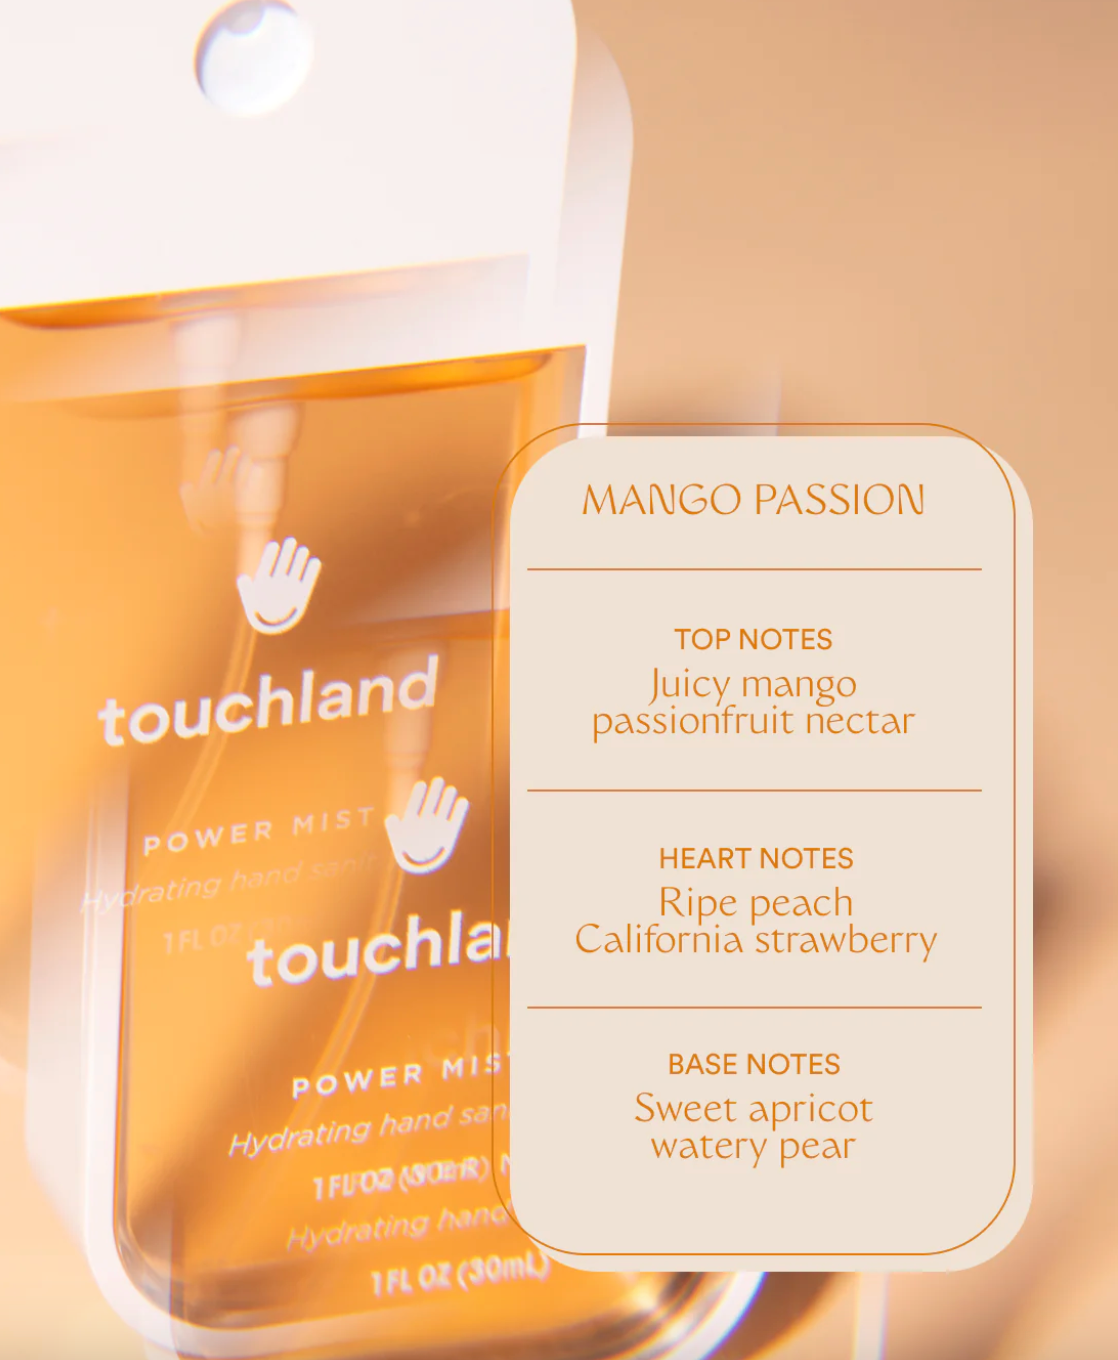 touchland power mist - mango passion